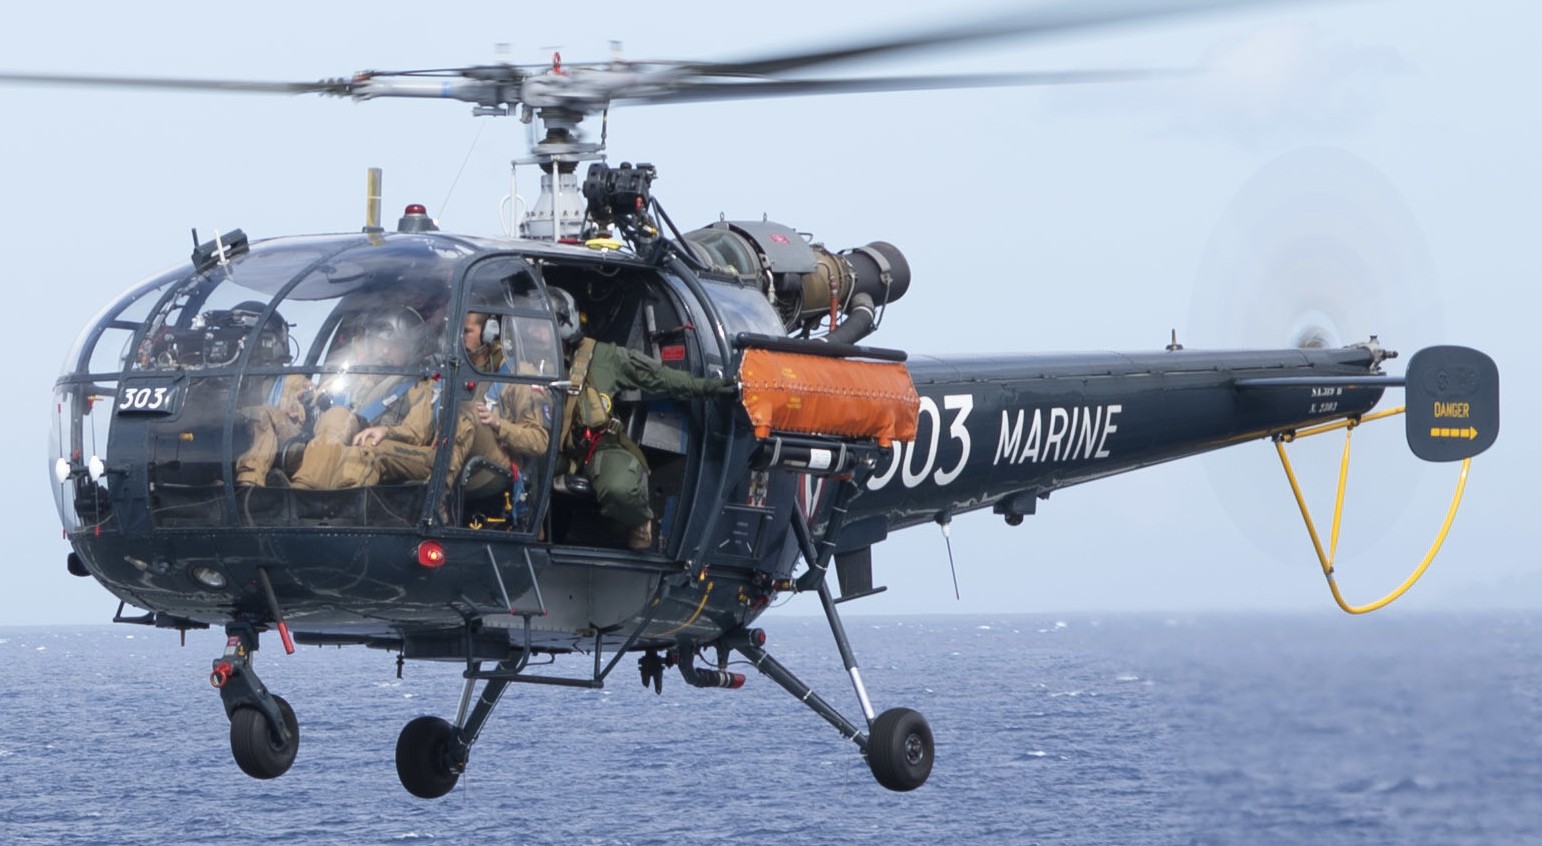 sa 316 319 alouette iii helicopter french navy marine nationale aeronavale flottille 303 28